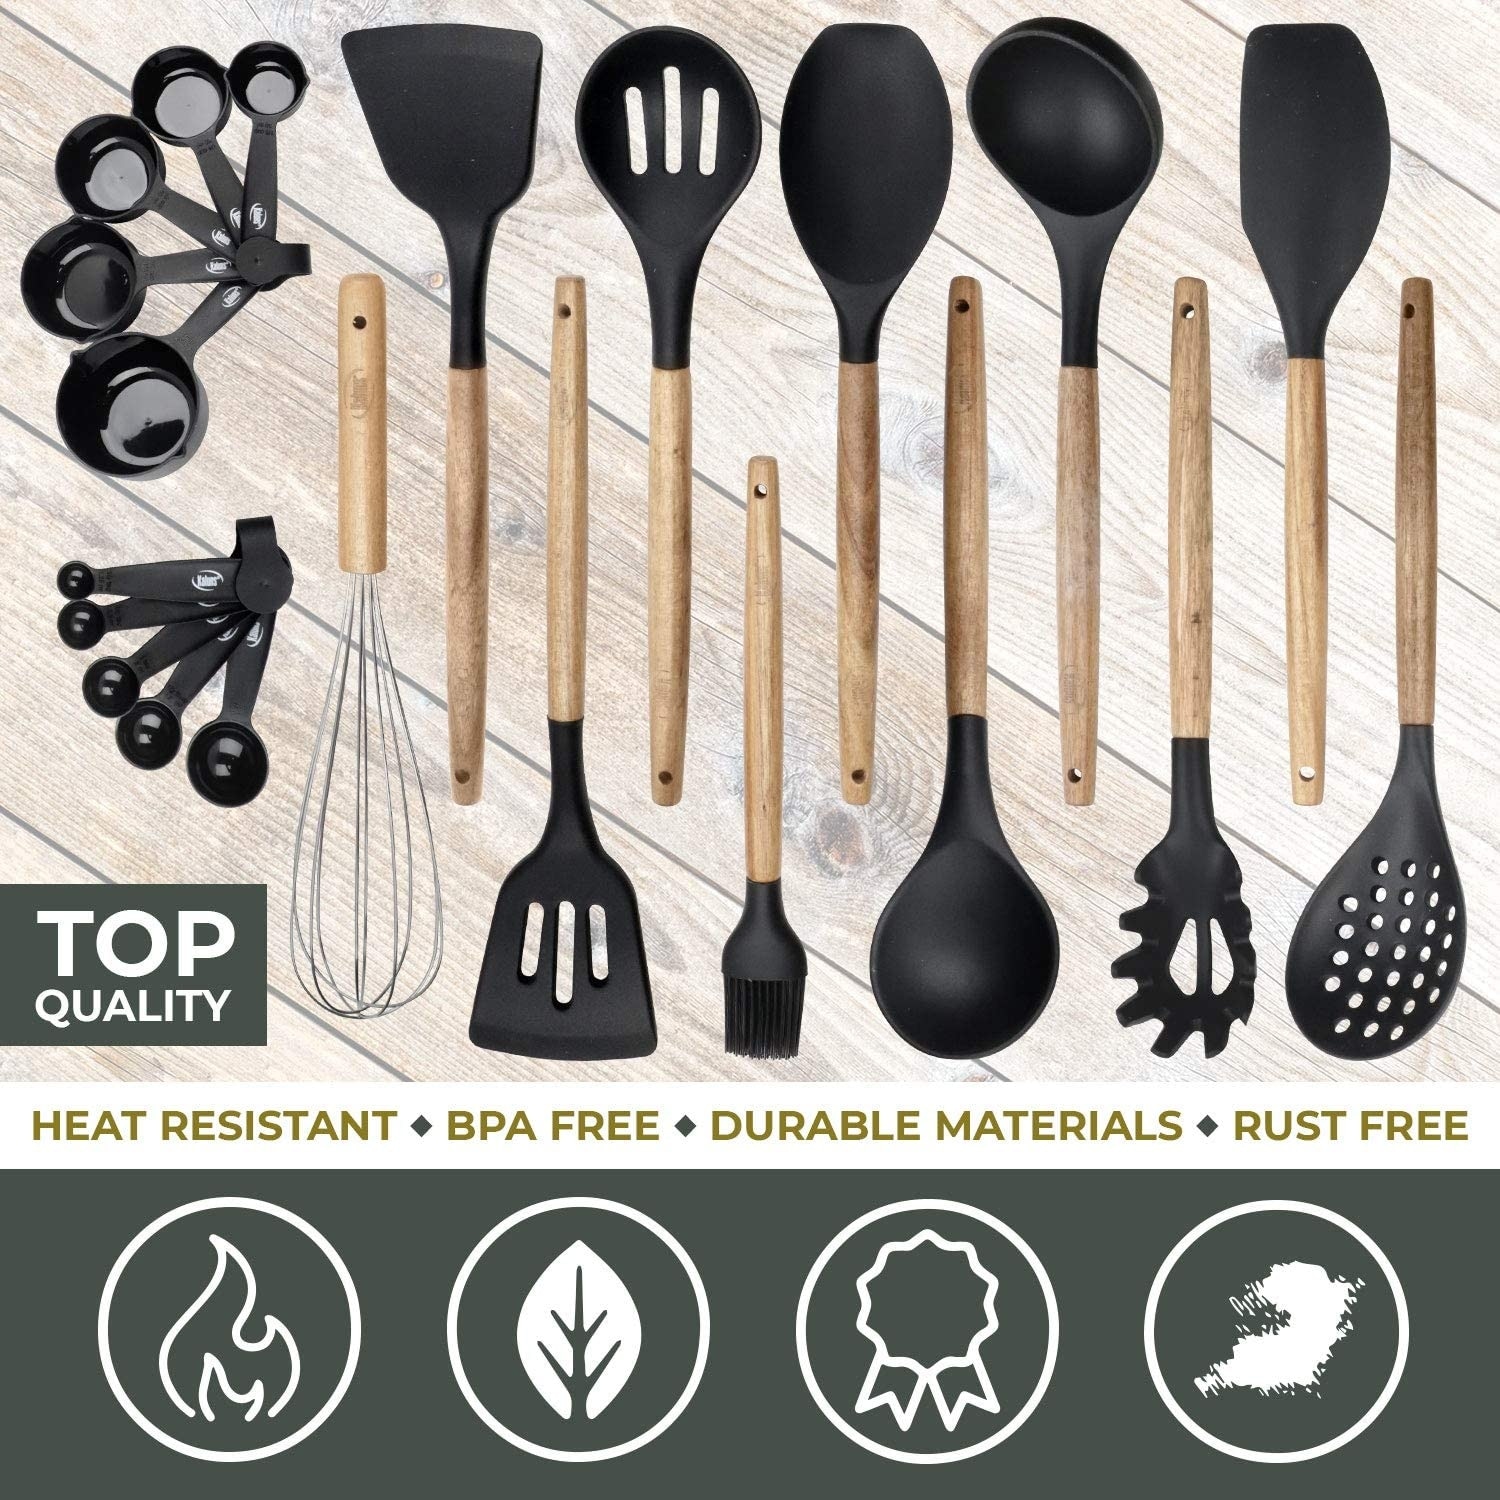 BECBOLDF kitchen utensils set - 21 silicone cooking utensils - kitchen  spatulas for nonstick cookware - heat resistan,silicone stainle